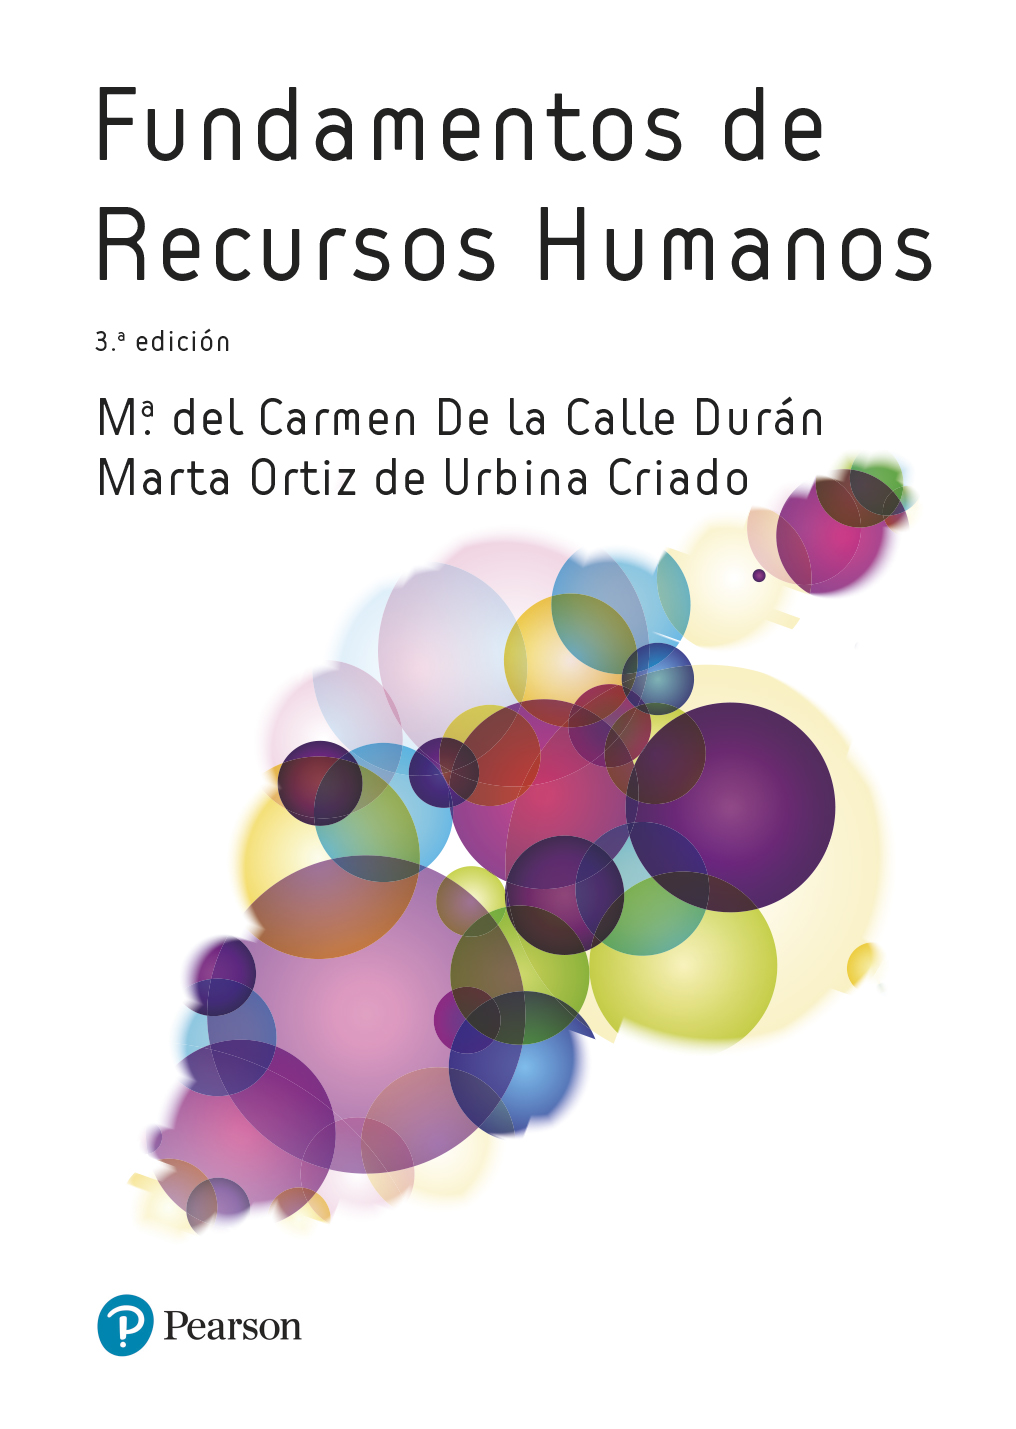 Fundamentos de recursos humanos, 3ª Edición